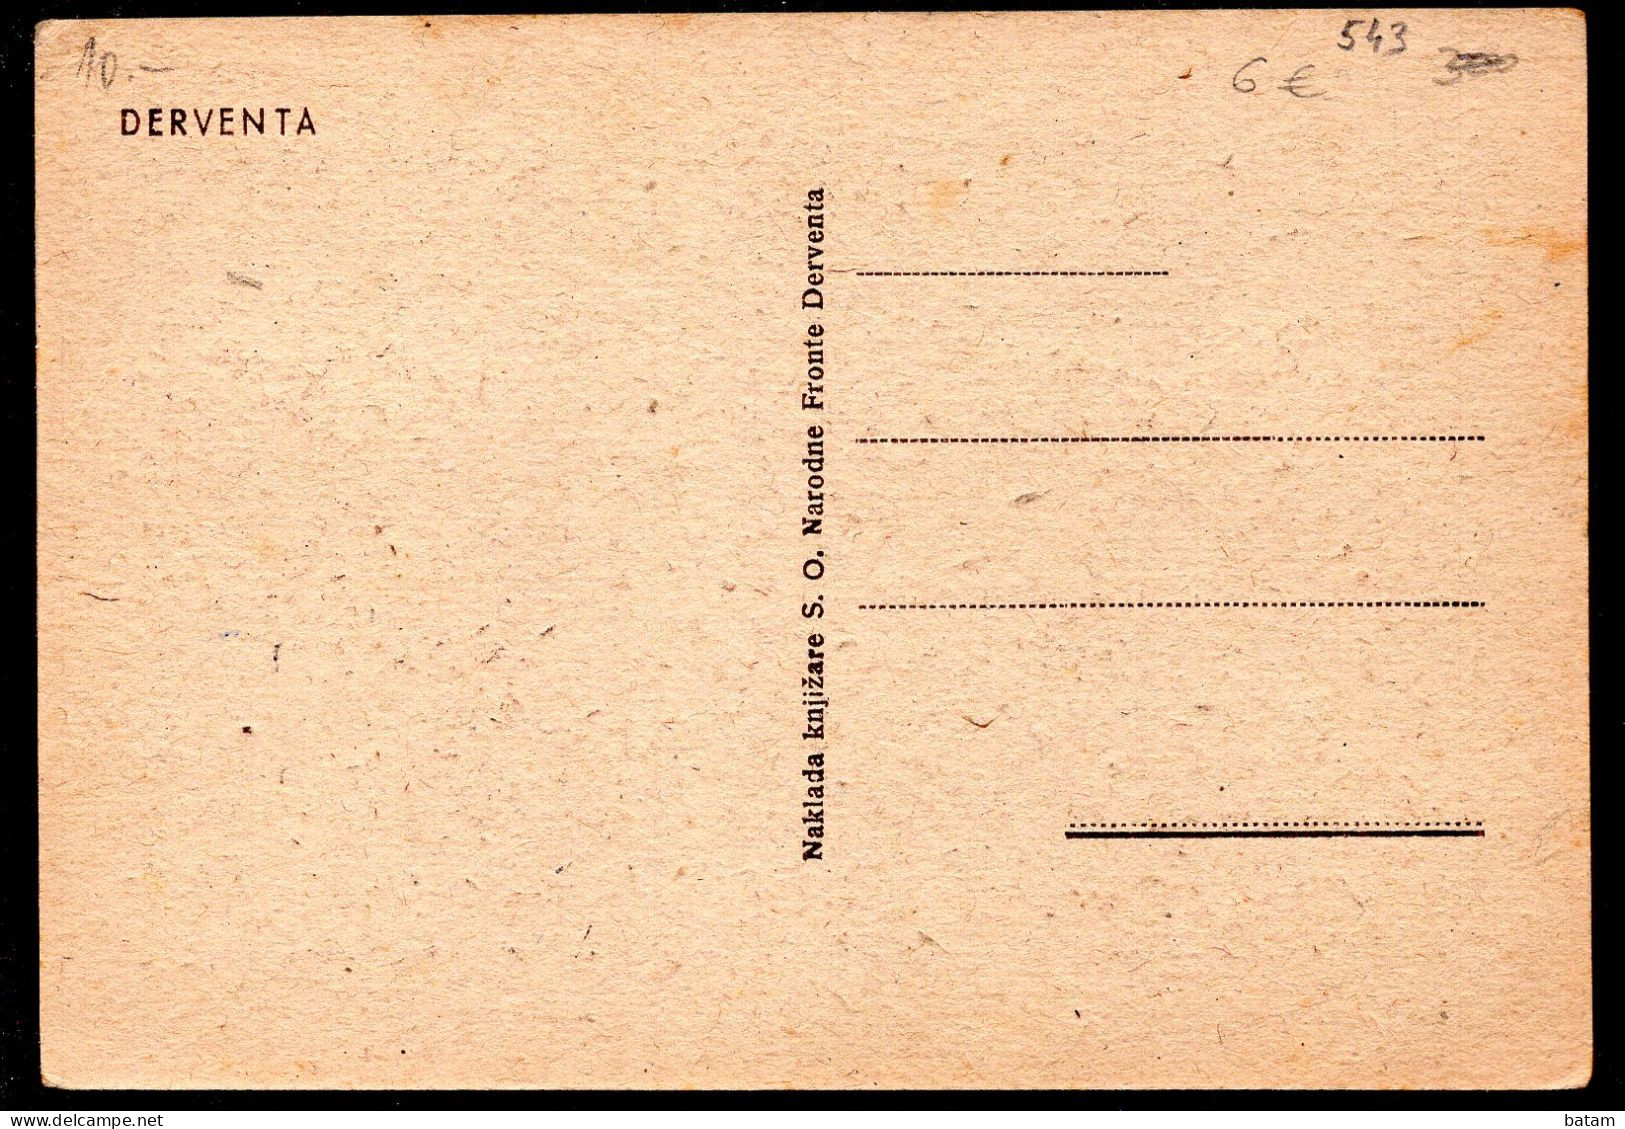 543 - Bosnia And Herzegovina - Derventa - Postcard - Bosnia And Herzegovina